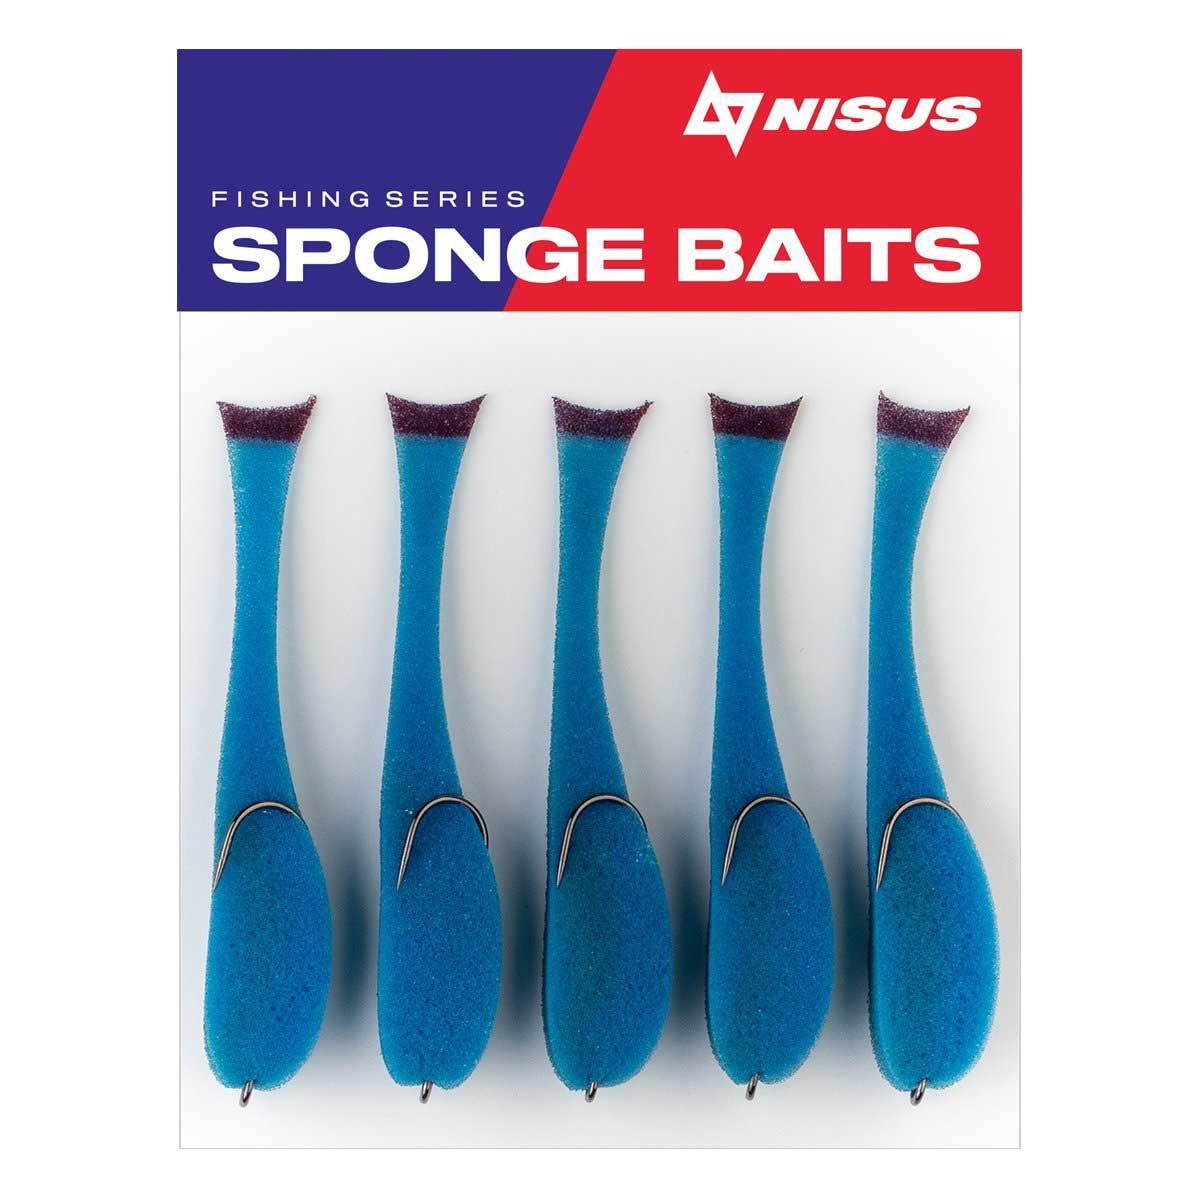 Sponge baits: types and fishing tips – TONAREX